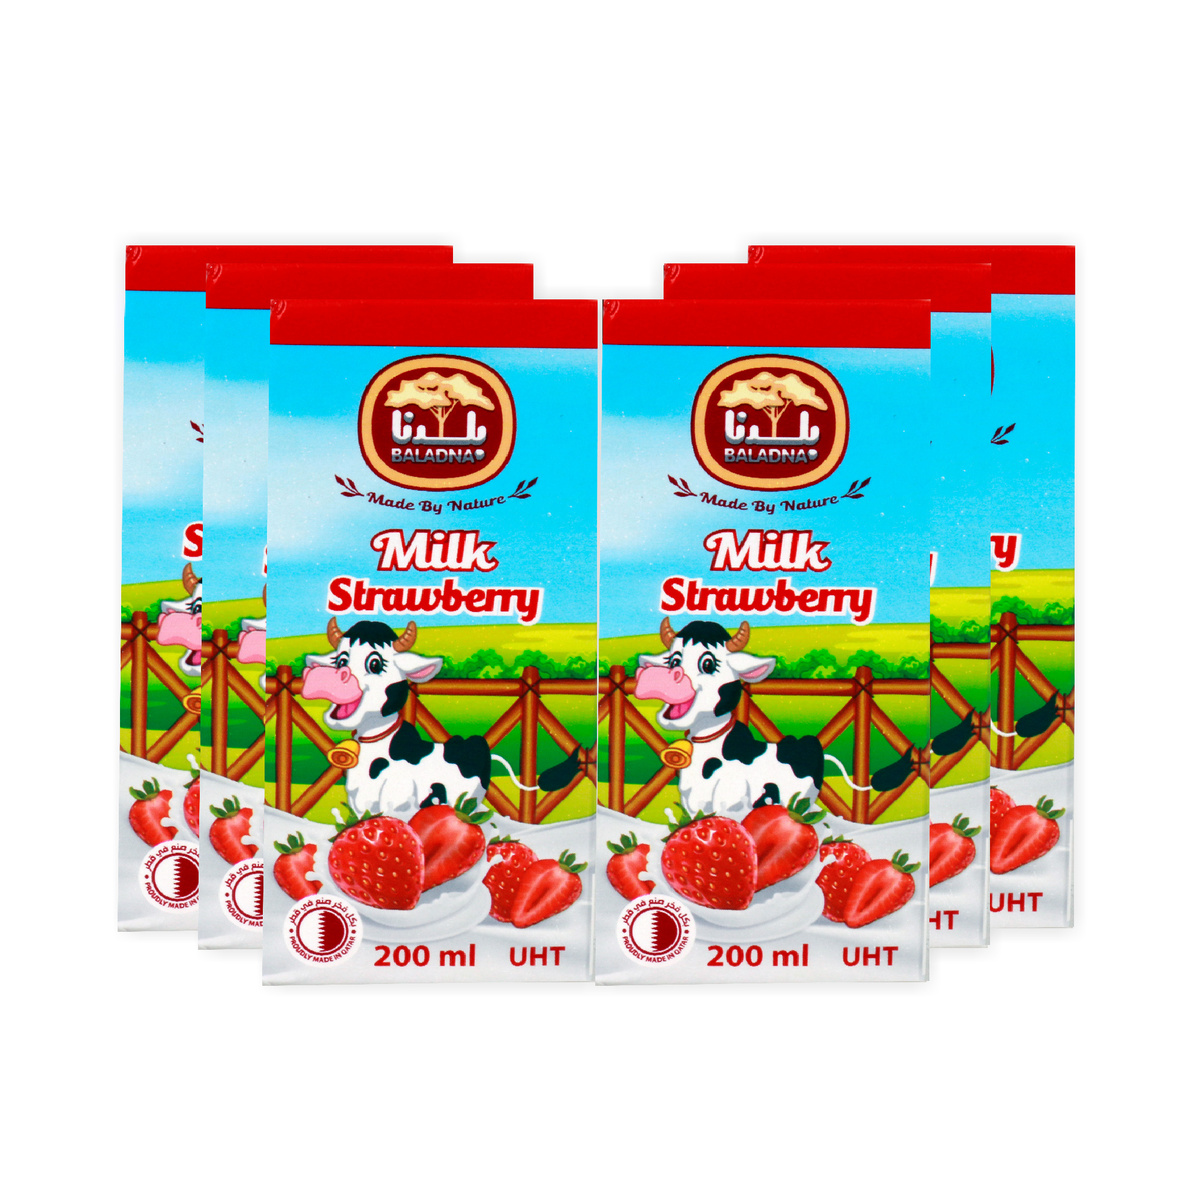 Baladna UHT Flavored Milk Strawberry 200ml 5+1